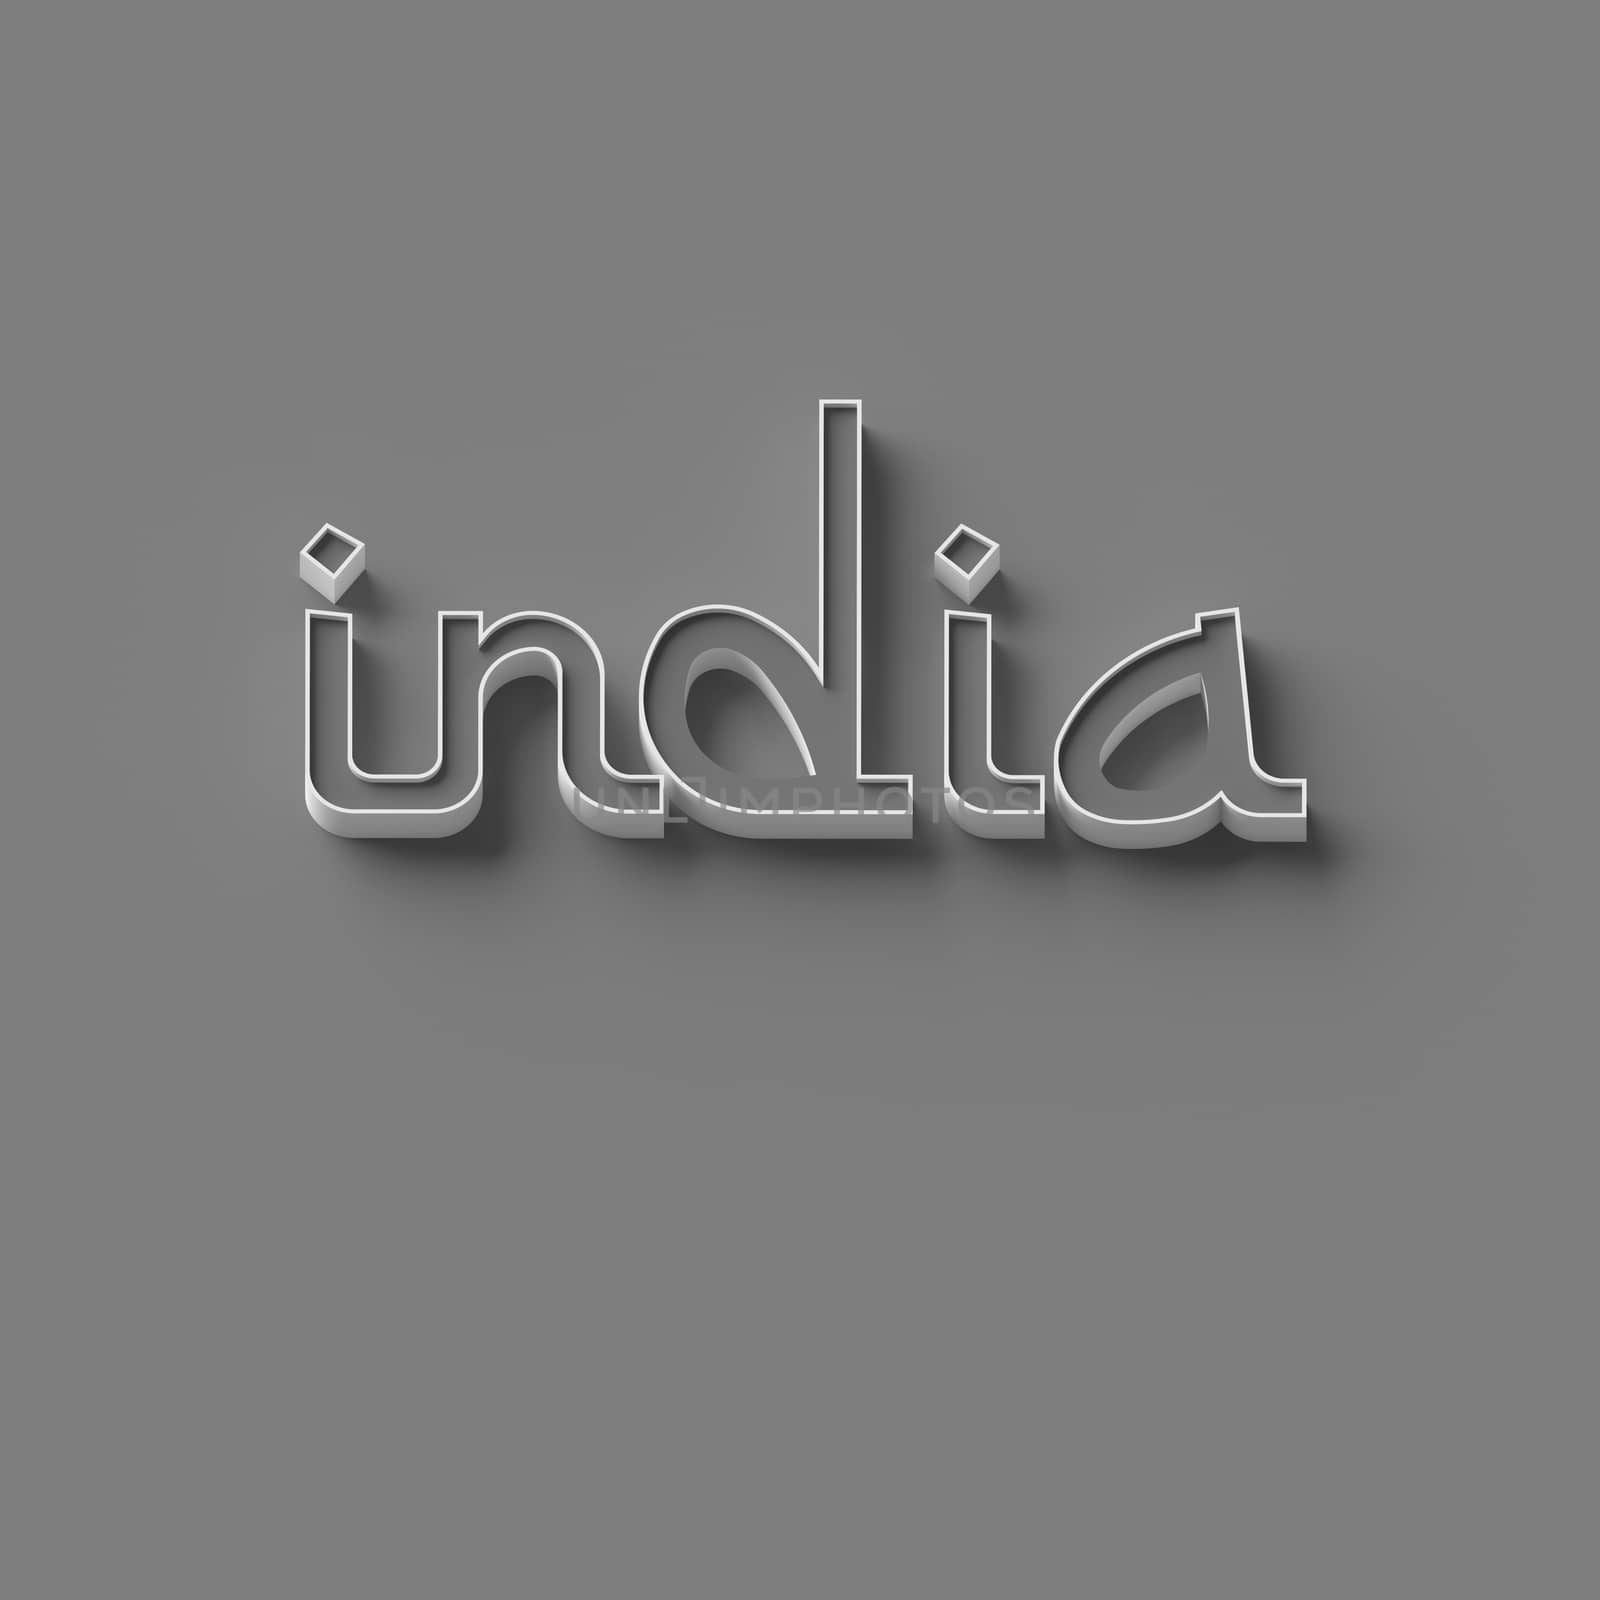 3D RENDERING WORDS "india" ON BLACK PLAIN BACKGROUND